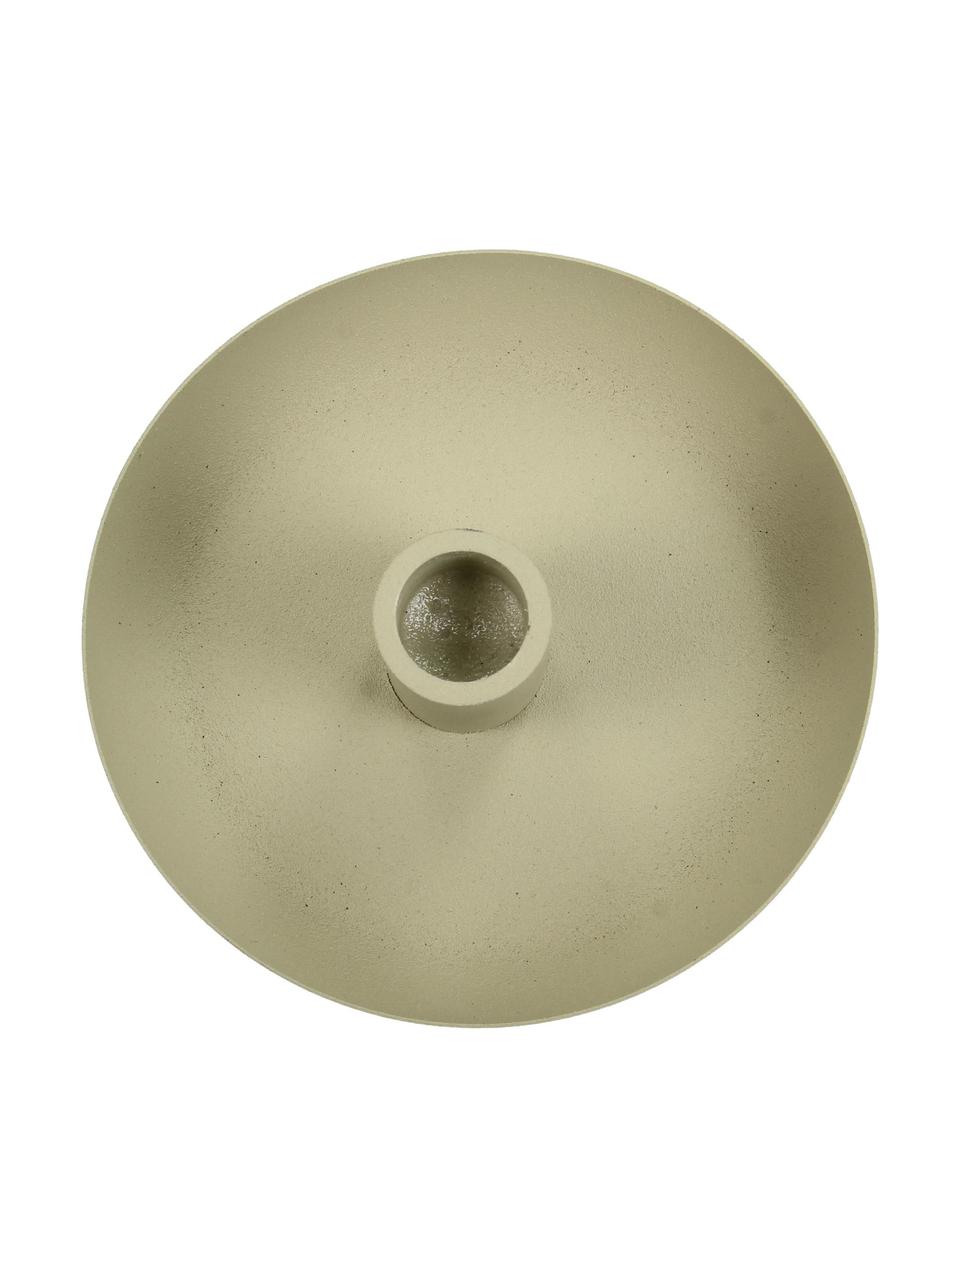 Kerzenhalter Doris in Beige, Aluminium, Beige, Ø 14 x H 5 cm